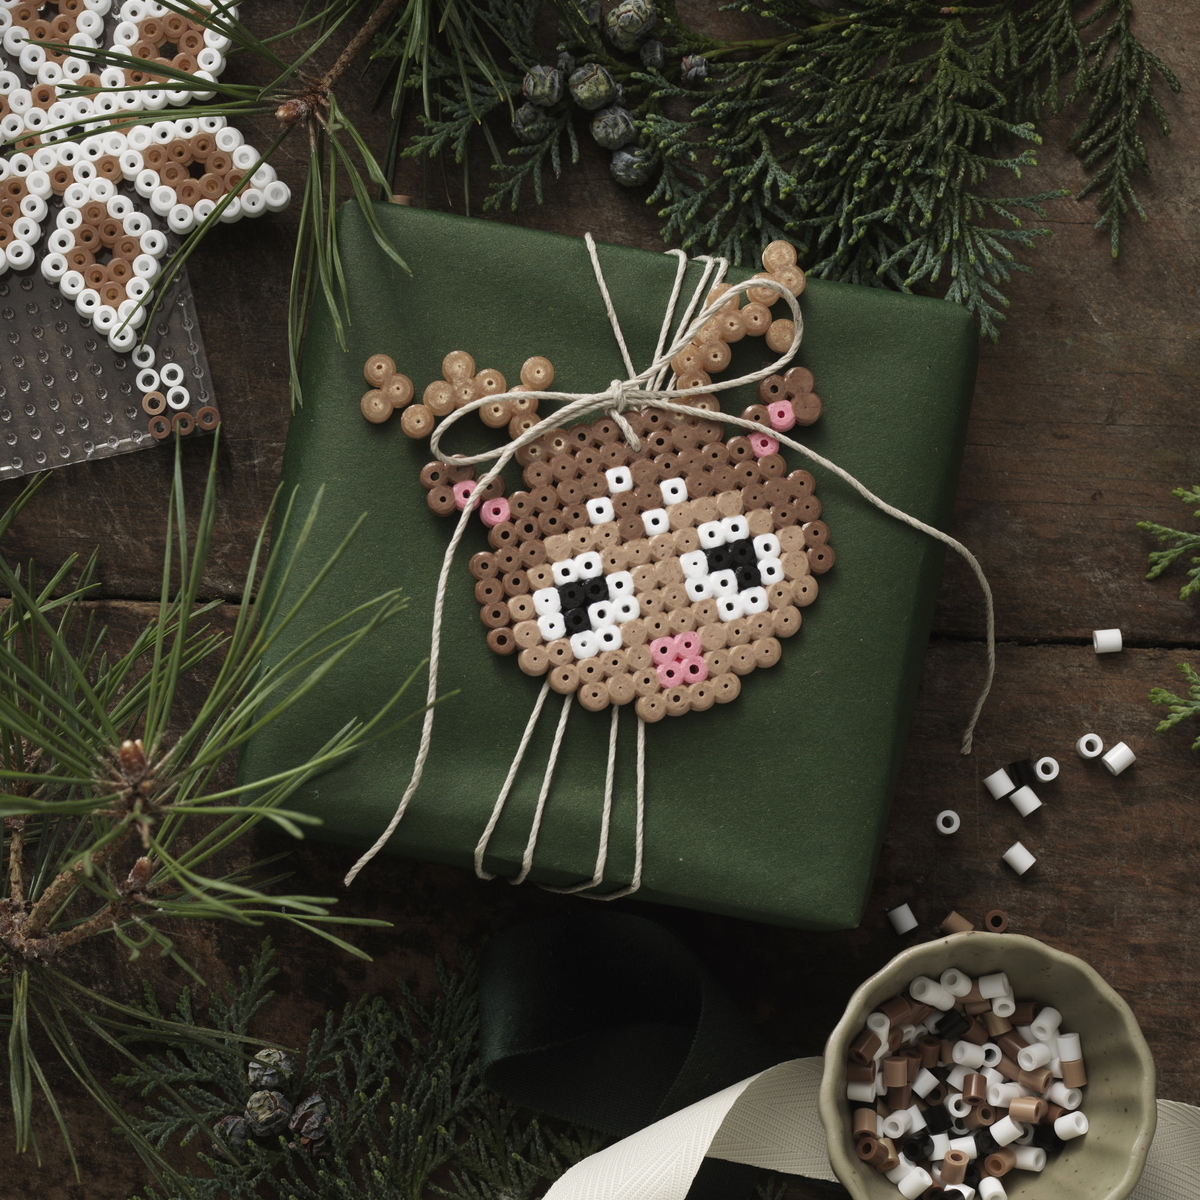 Make beaded gift ornaments